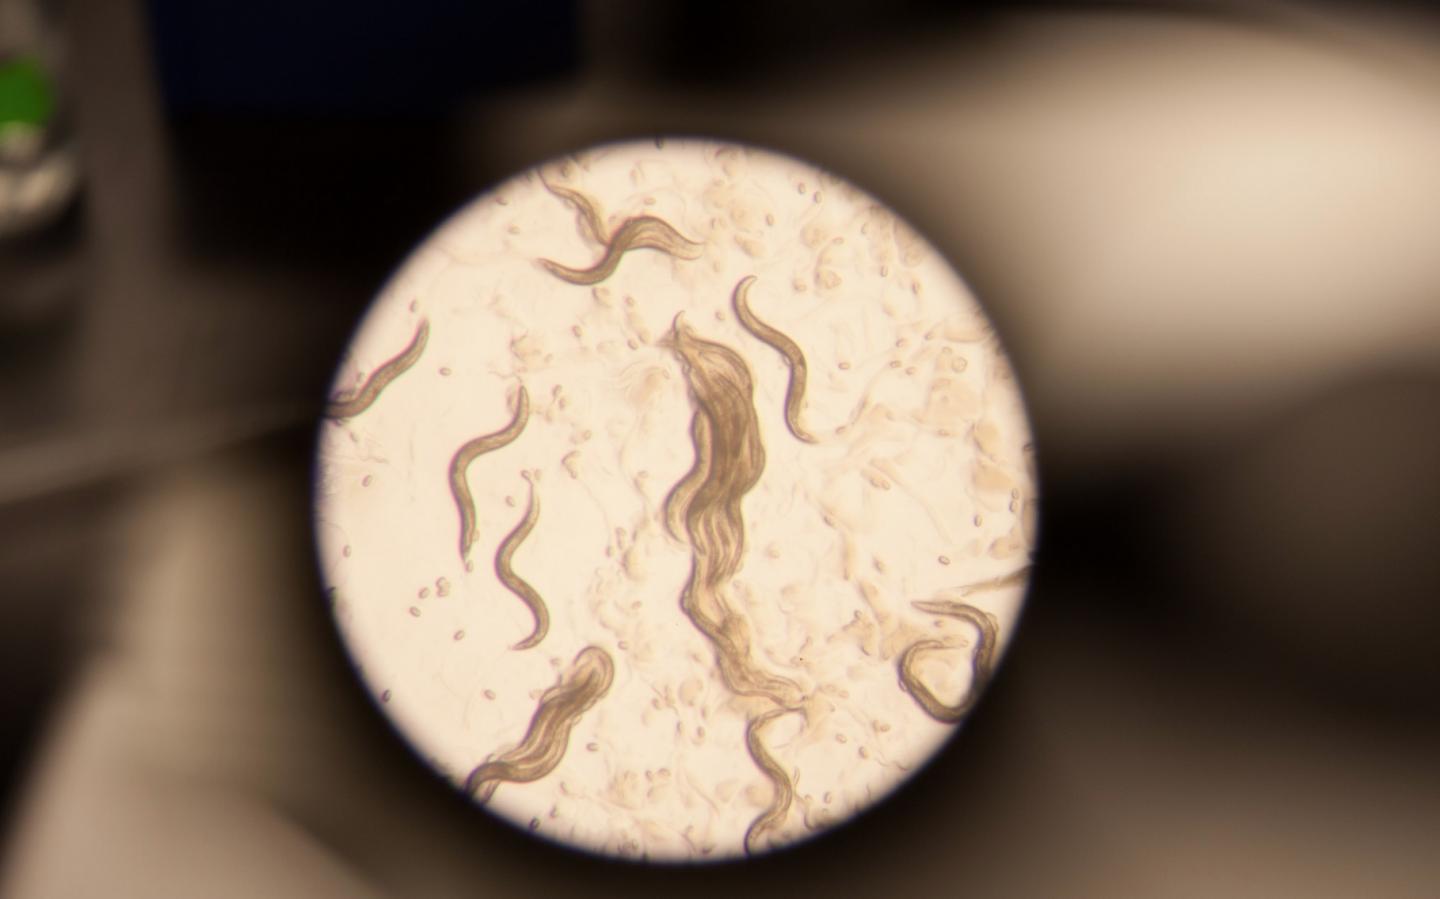 C. elegans under microscope